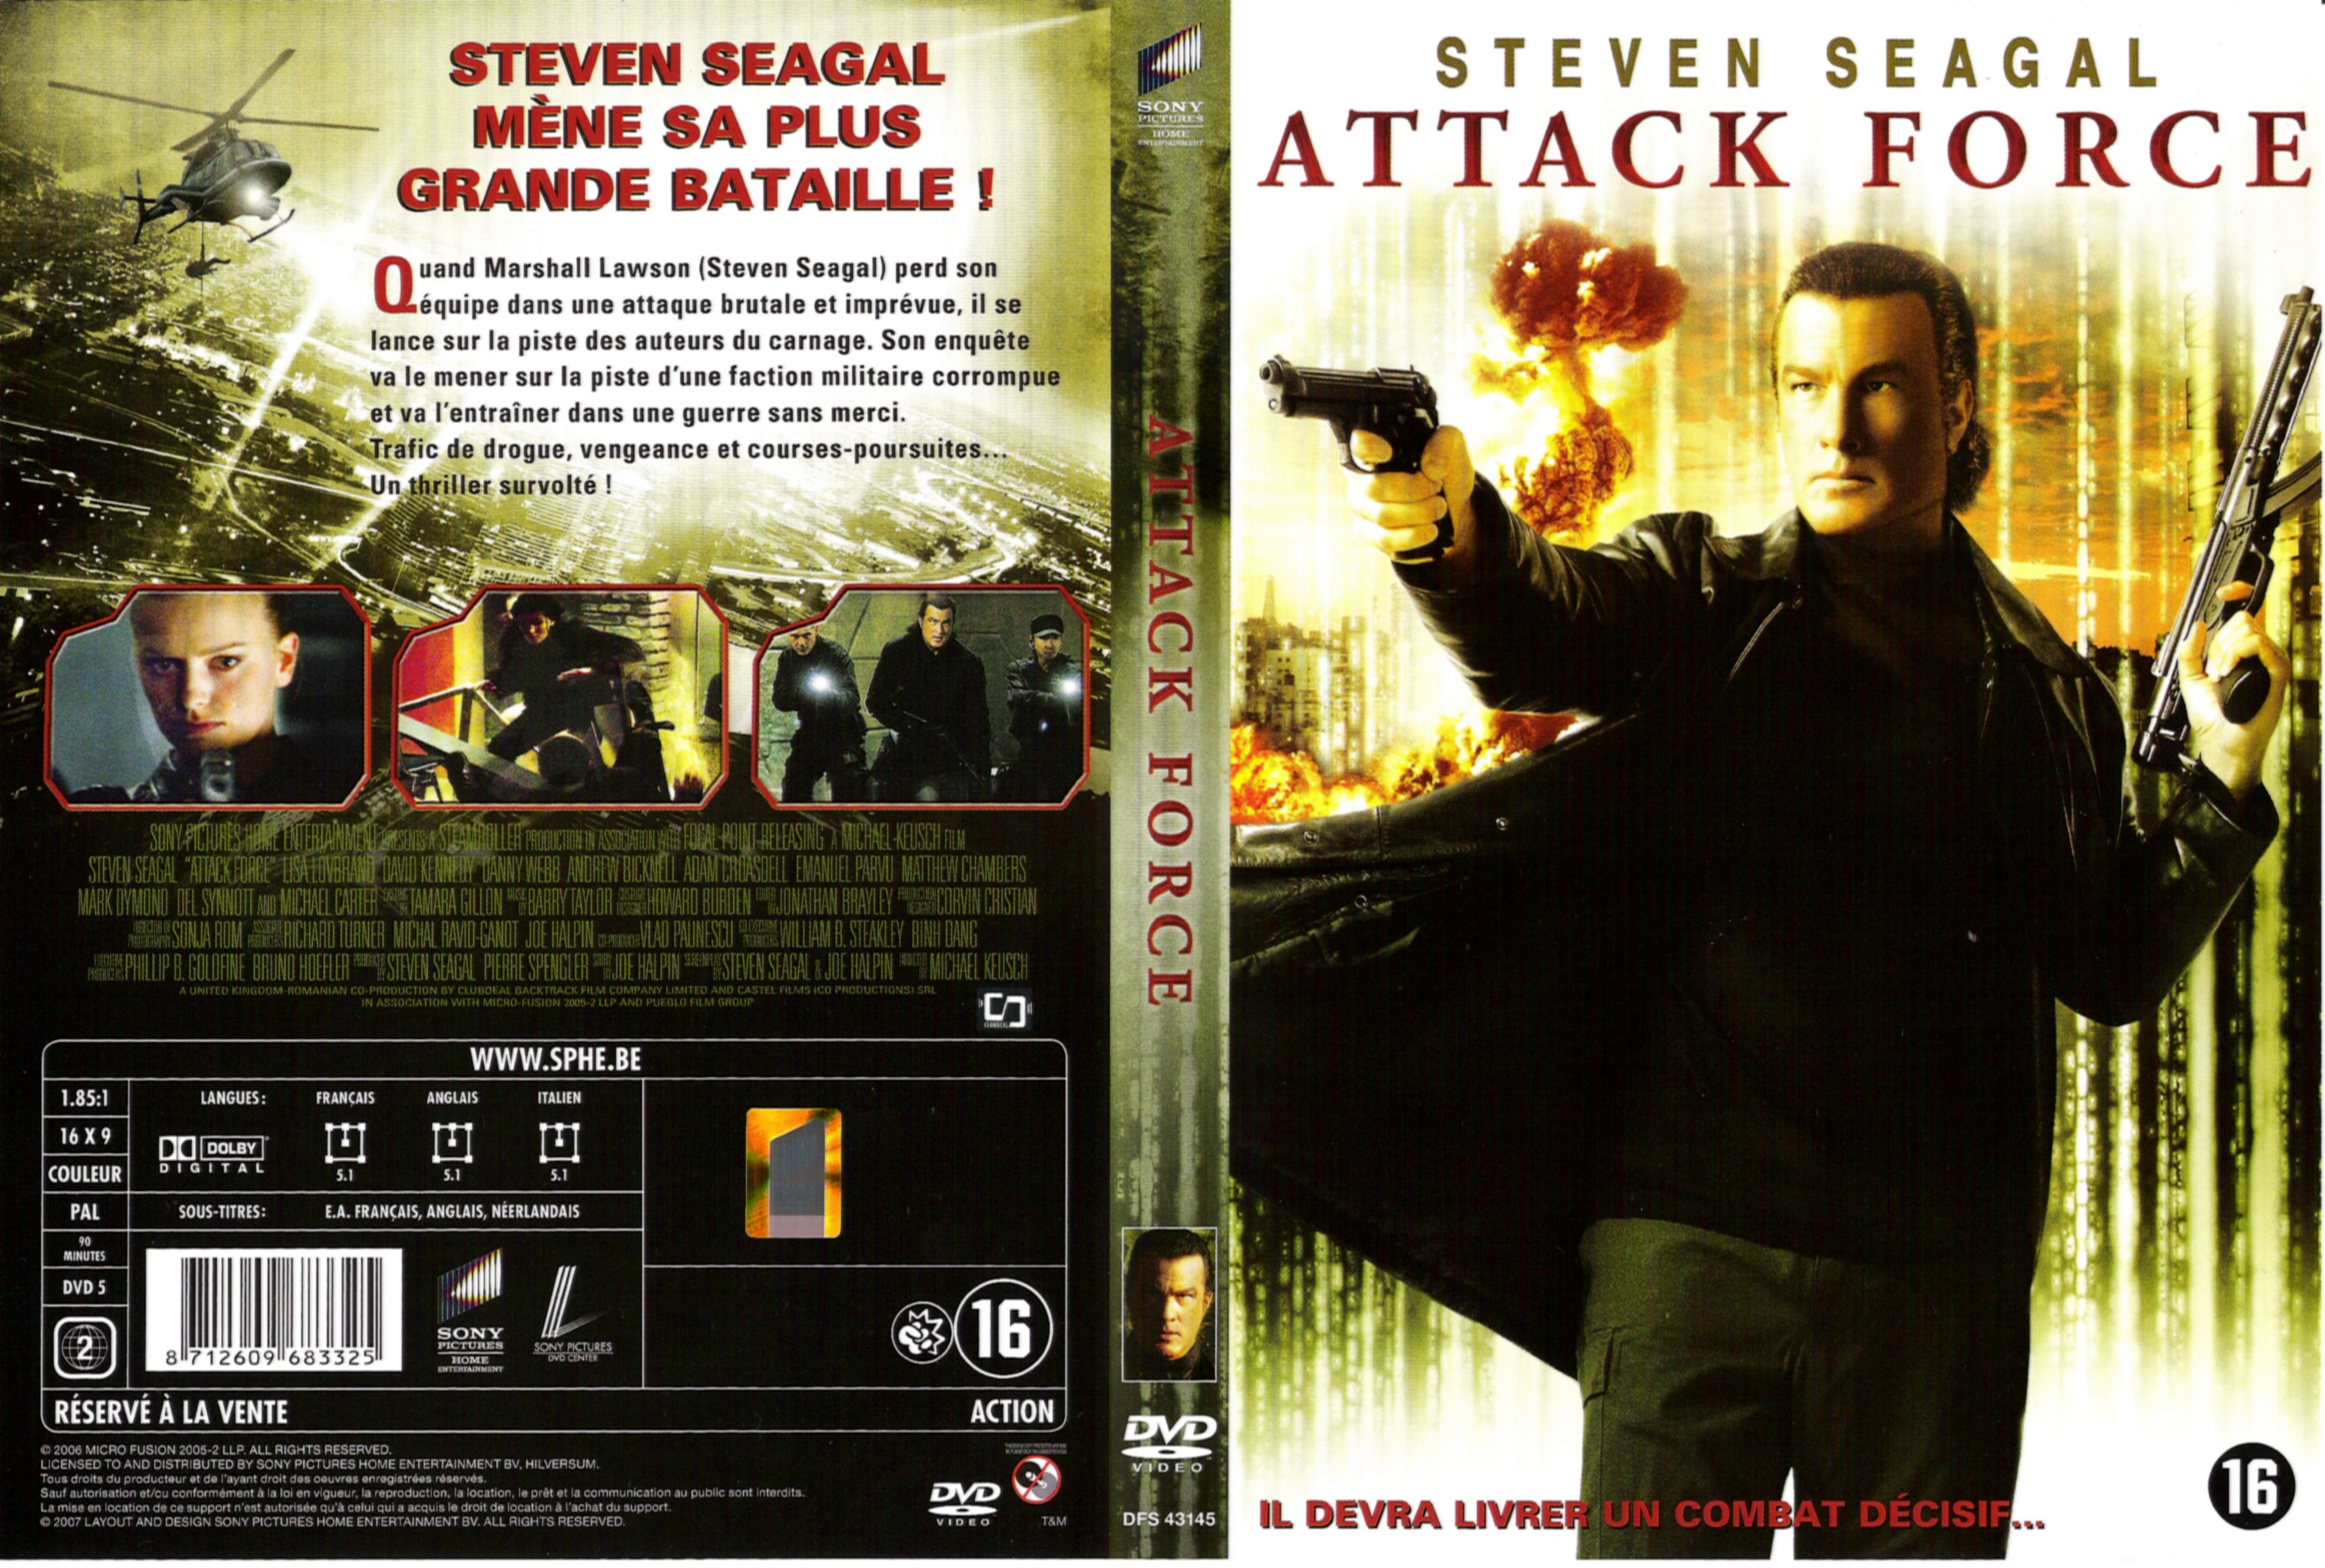 Jaquette DVD Attack force v2